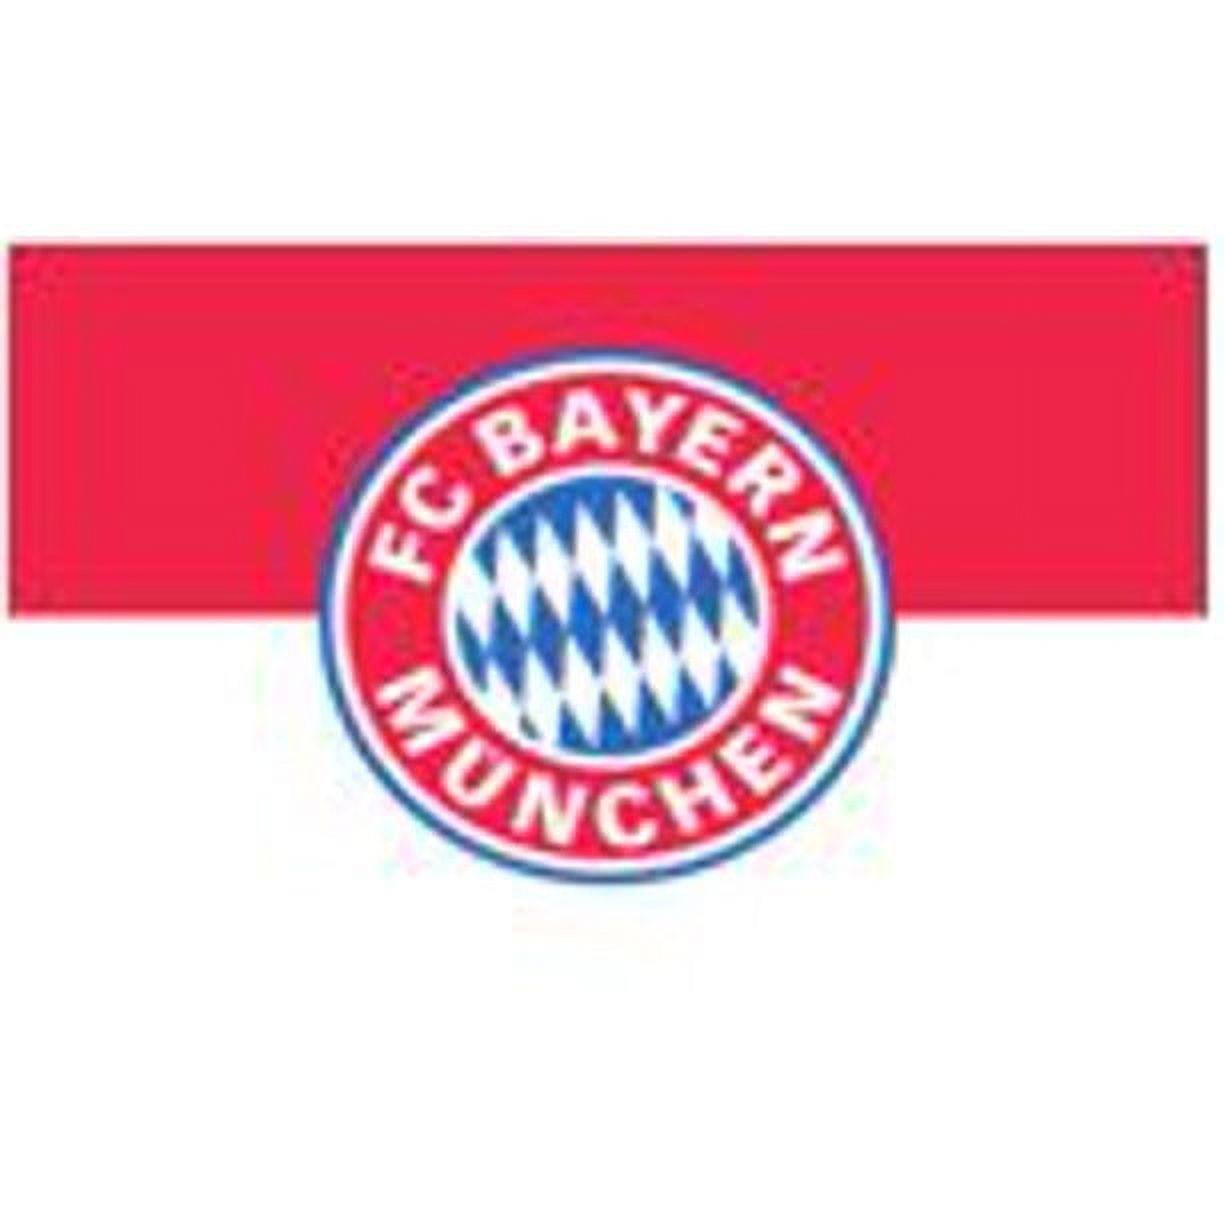 3x5 ft Franken Bayerische Bayern Bayern Flagge